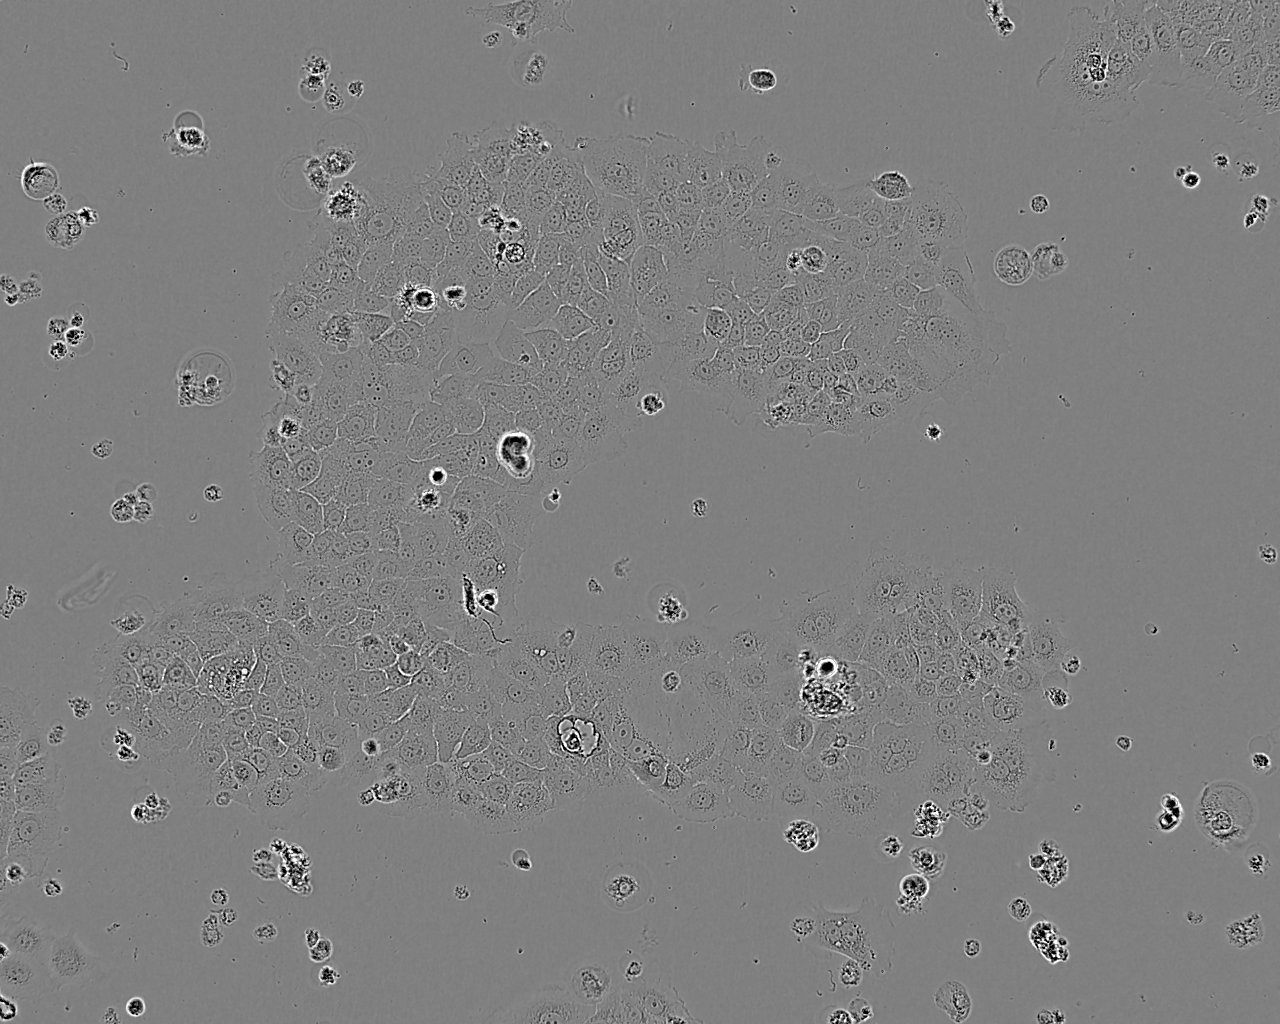 B-3 epithelioid cells人晶状体上皮细胞系,B-3 epithelioid cells